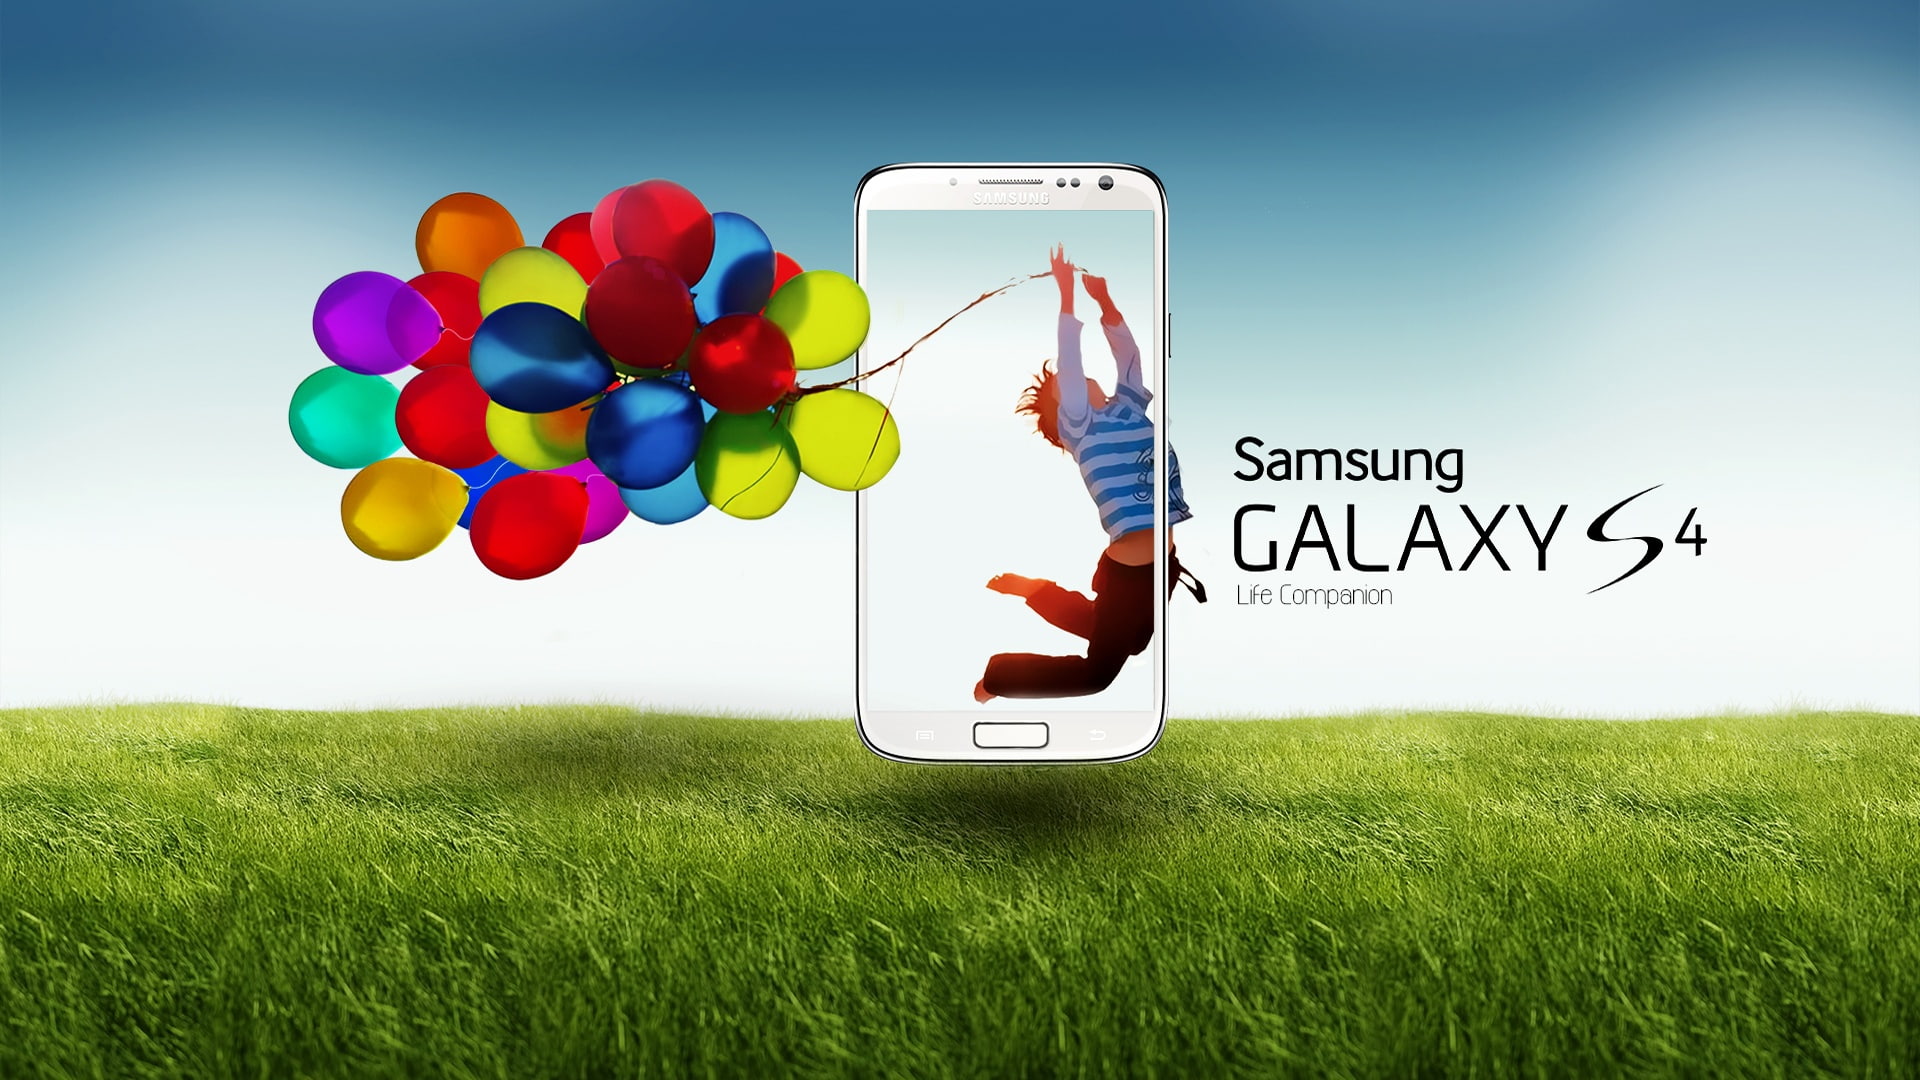 Samsung Galaxy S4 ads